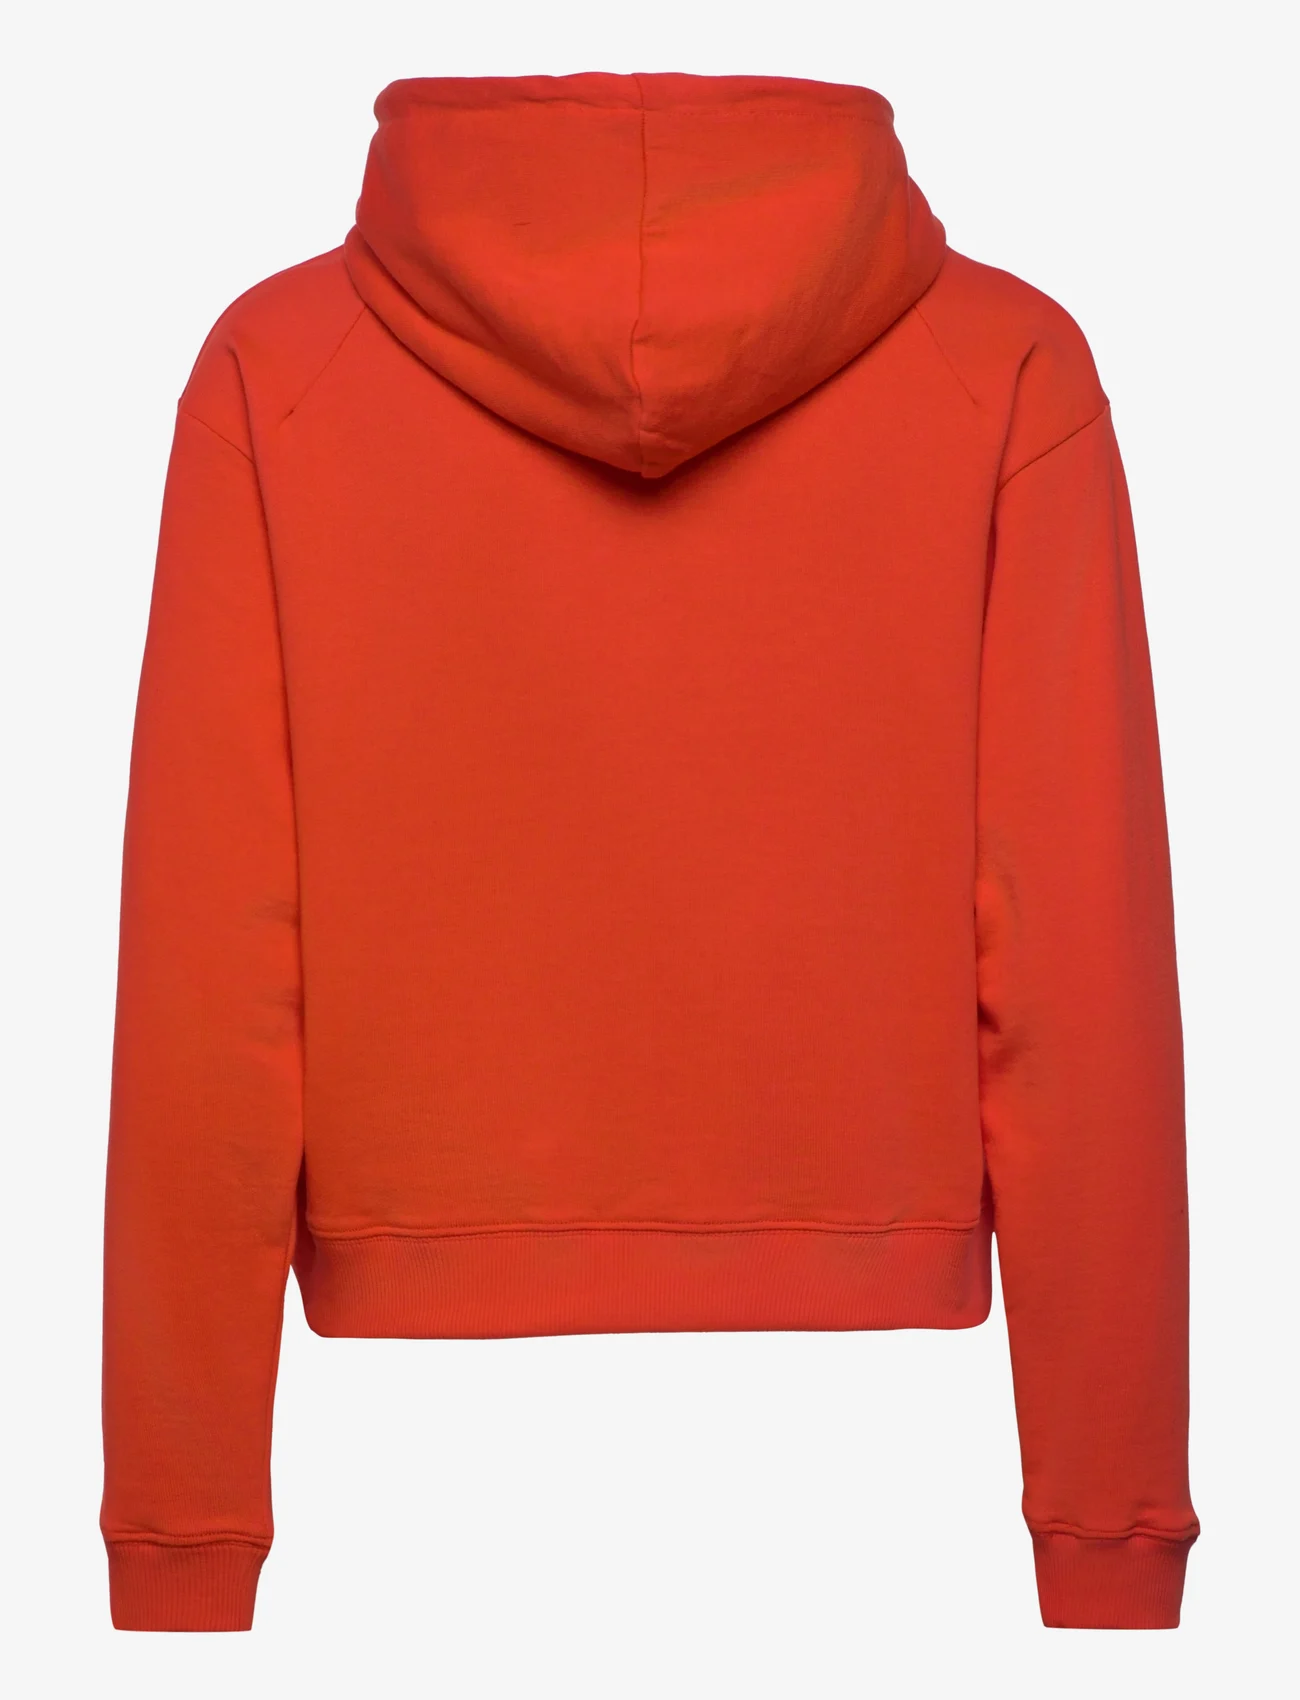 Svea - W. Cool Hood - hoodies - red - 1